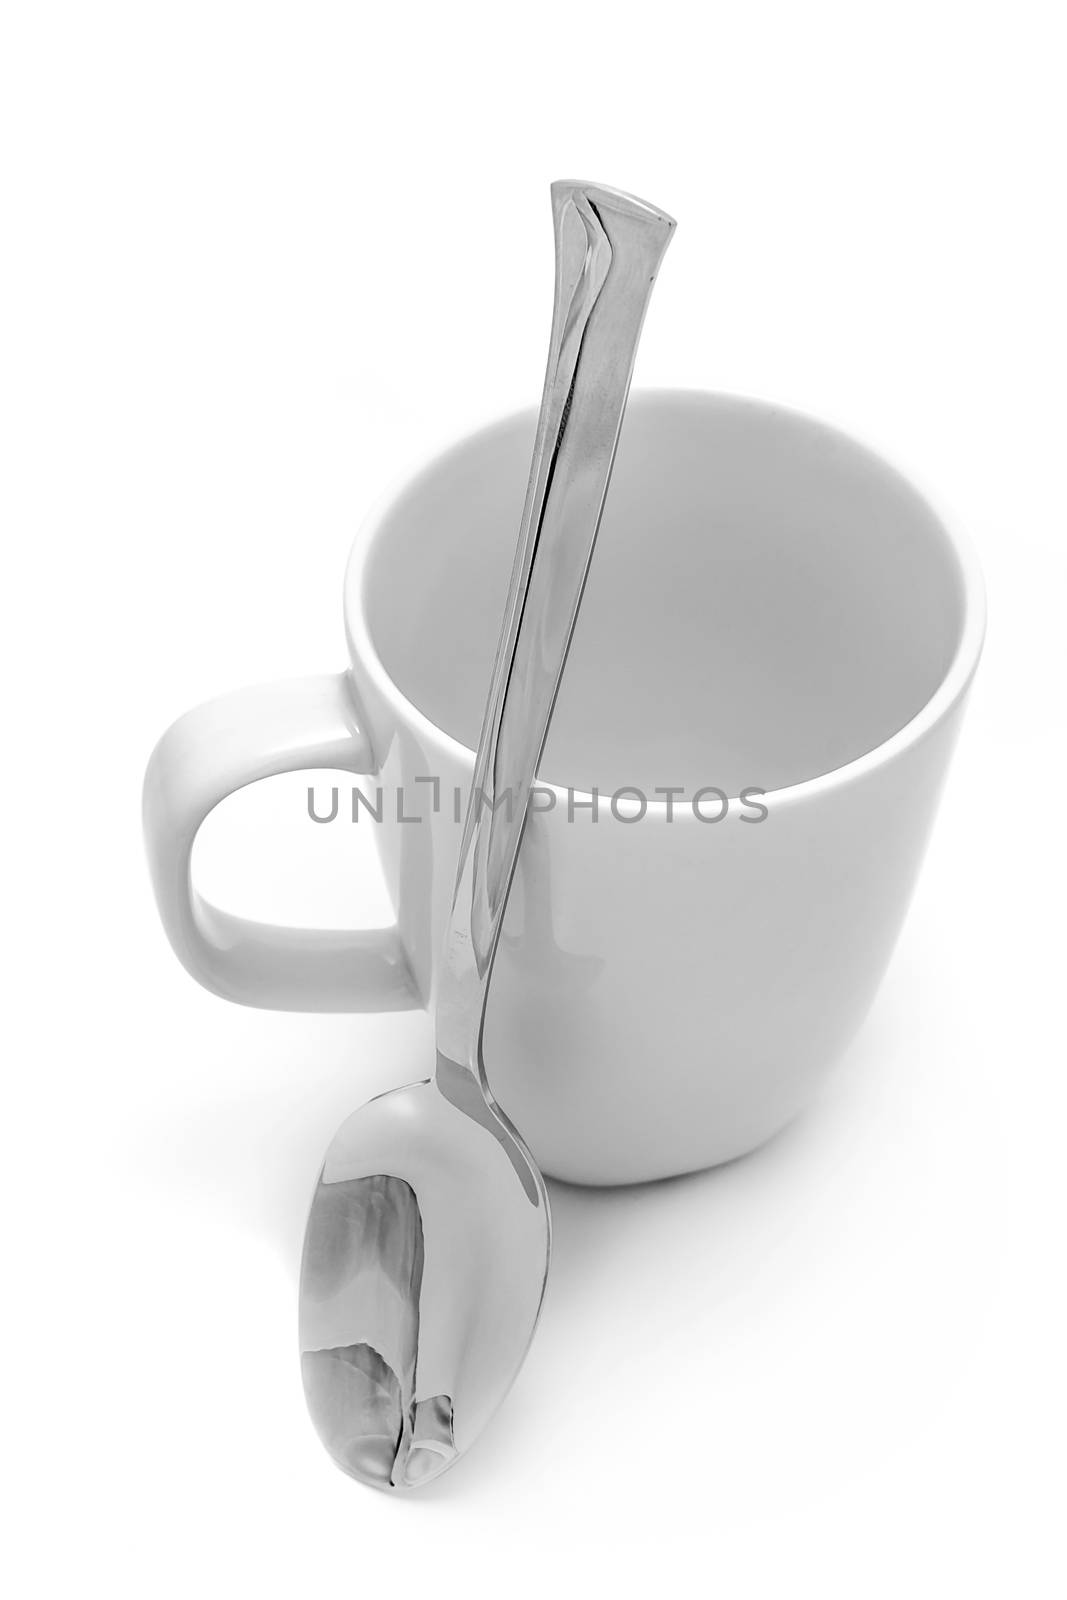 Mug and spoon by dynamicfoto